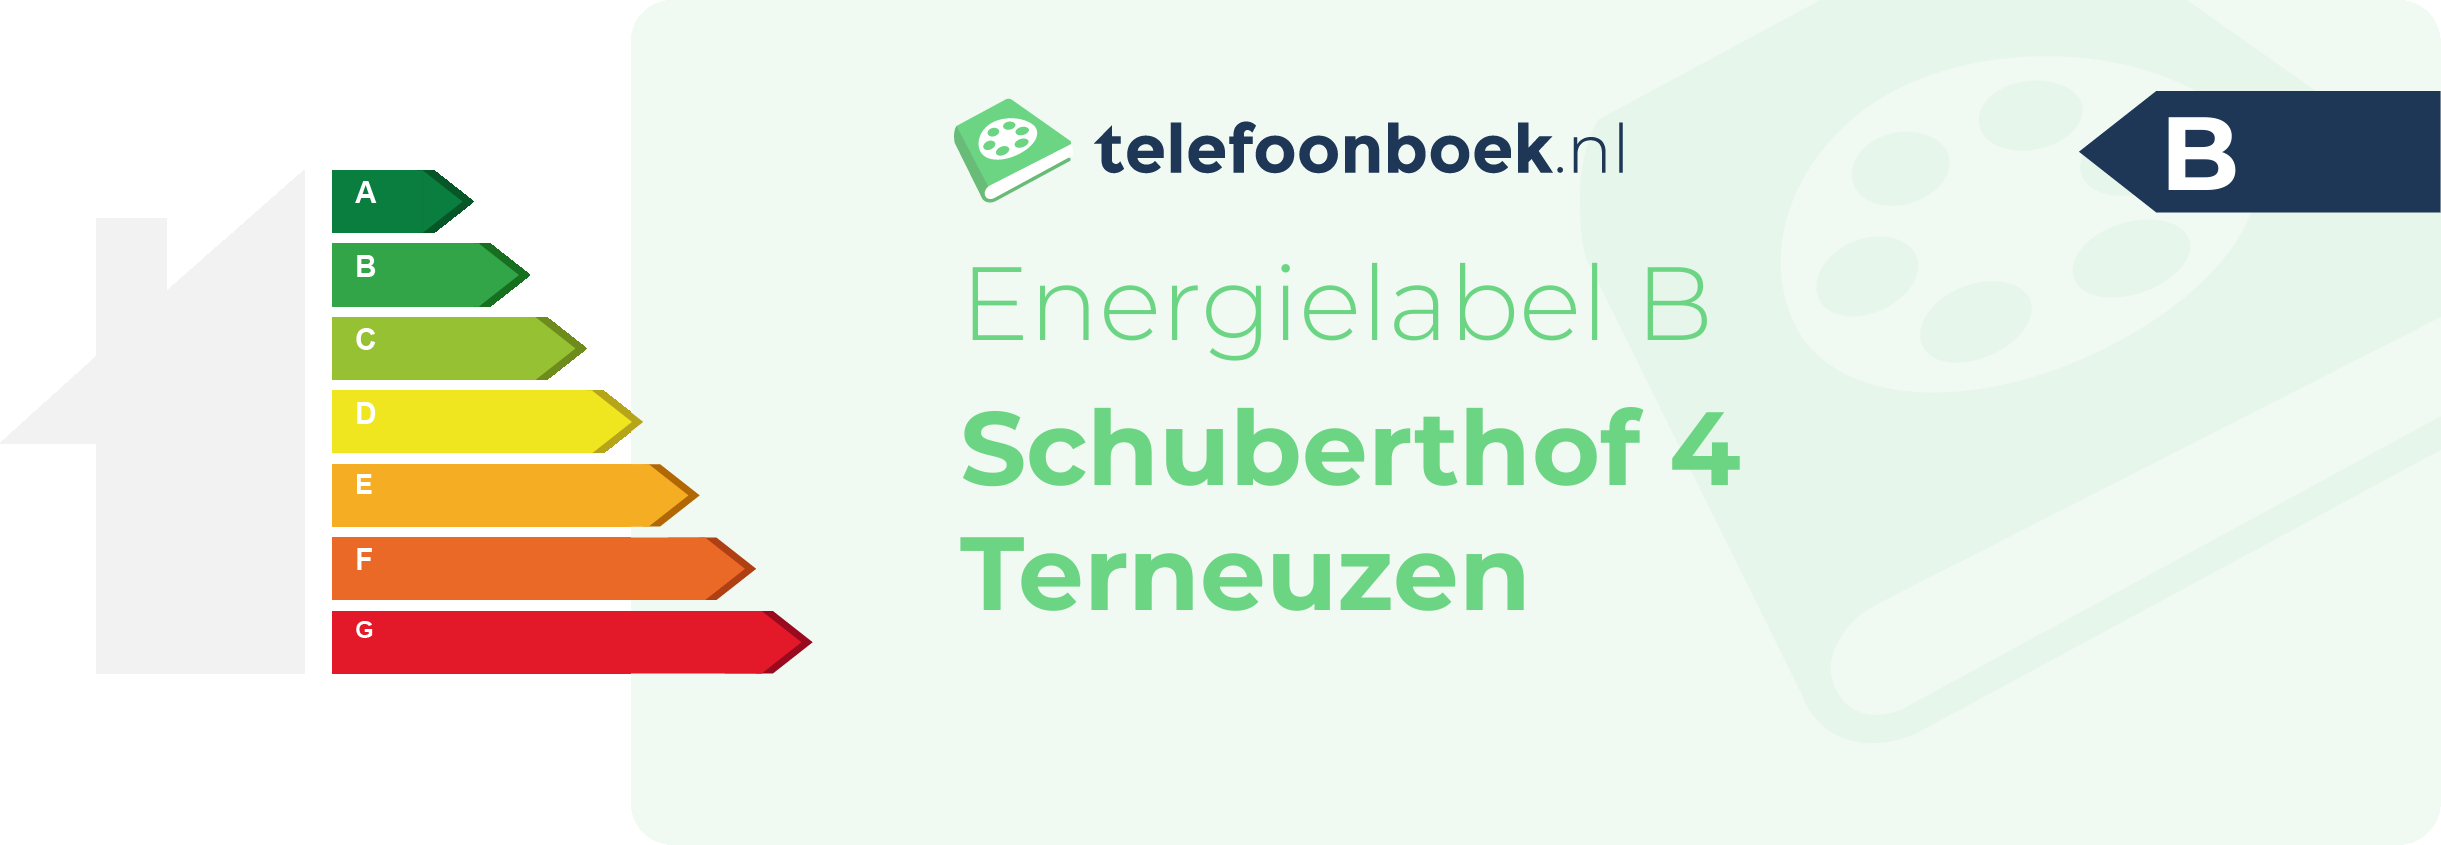 Energielabel Schuberthof 4 Terneuzen